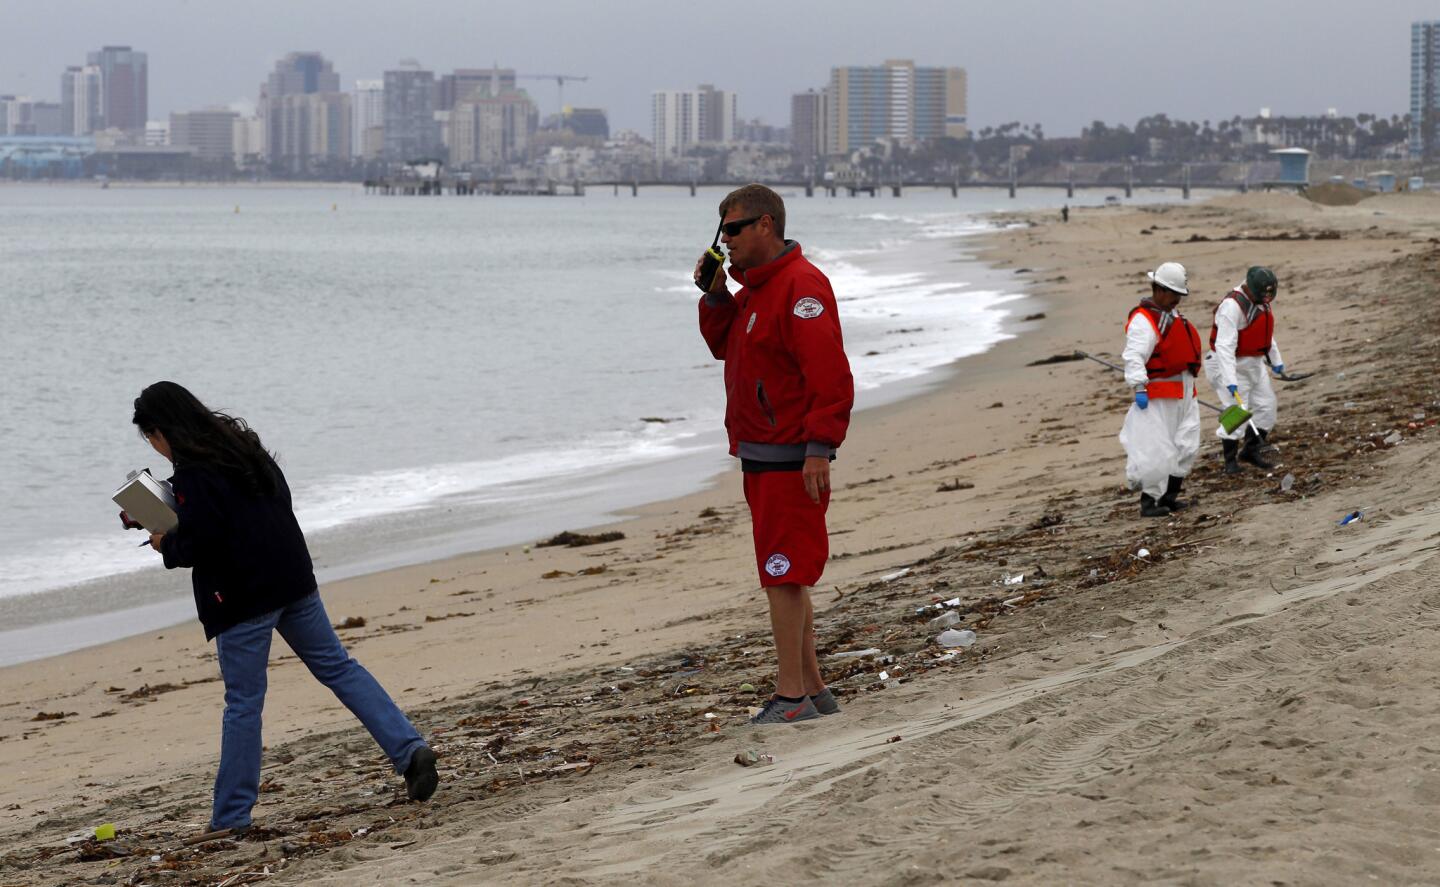 Tar balls wash ashore in Long Beach